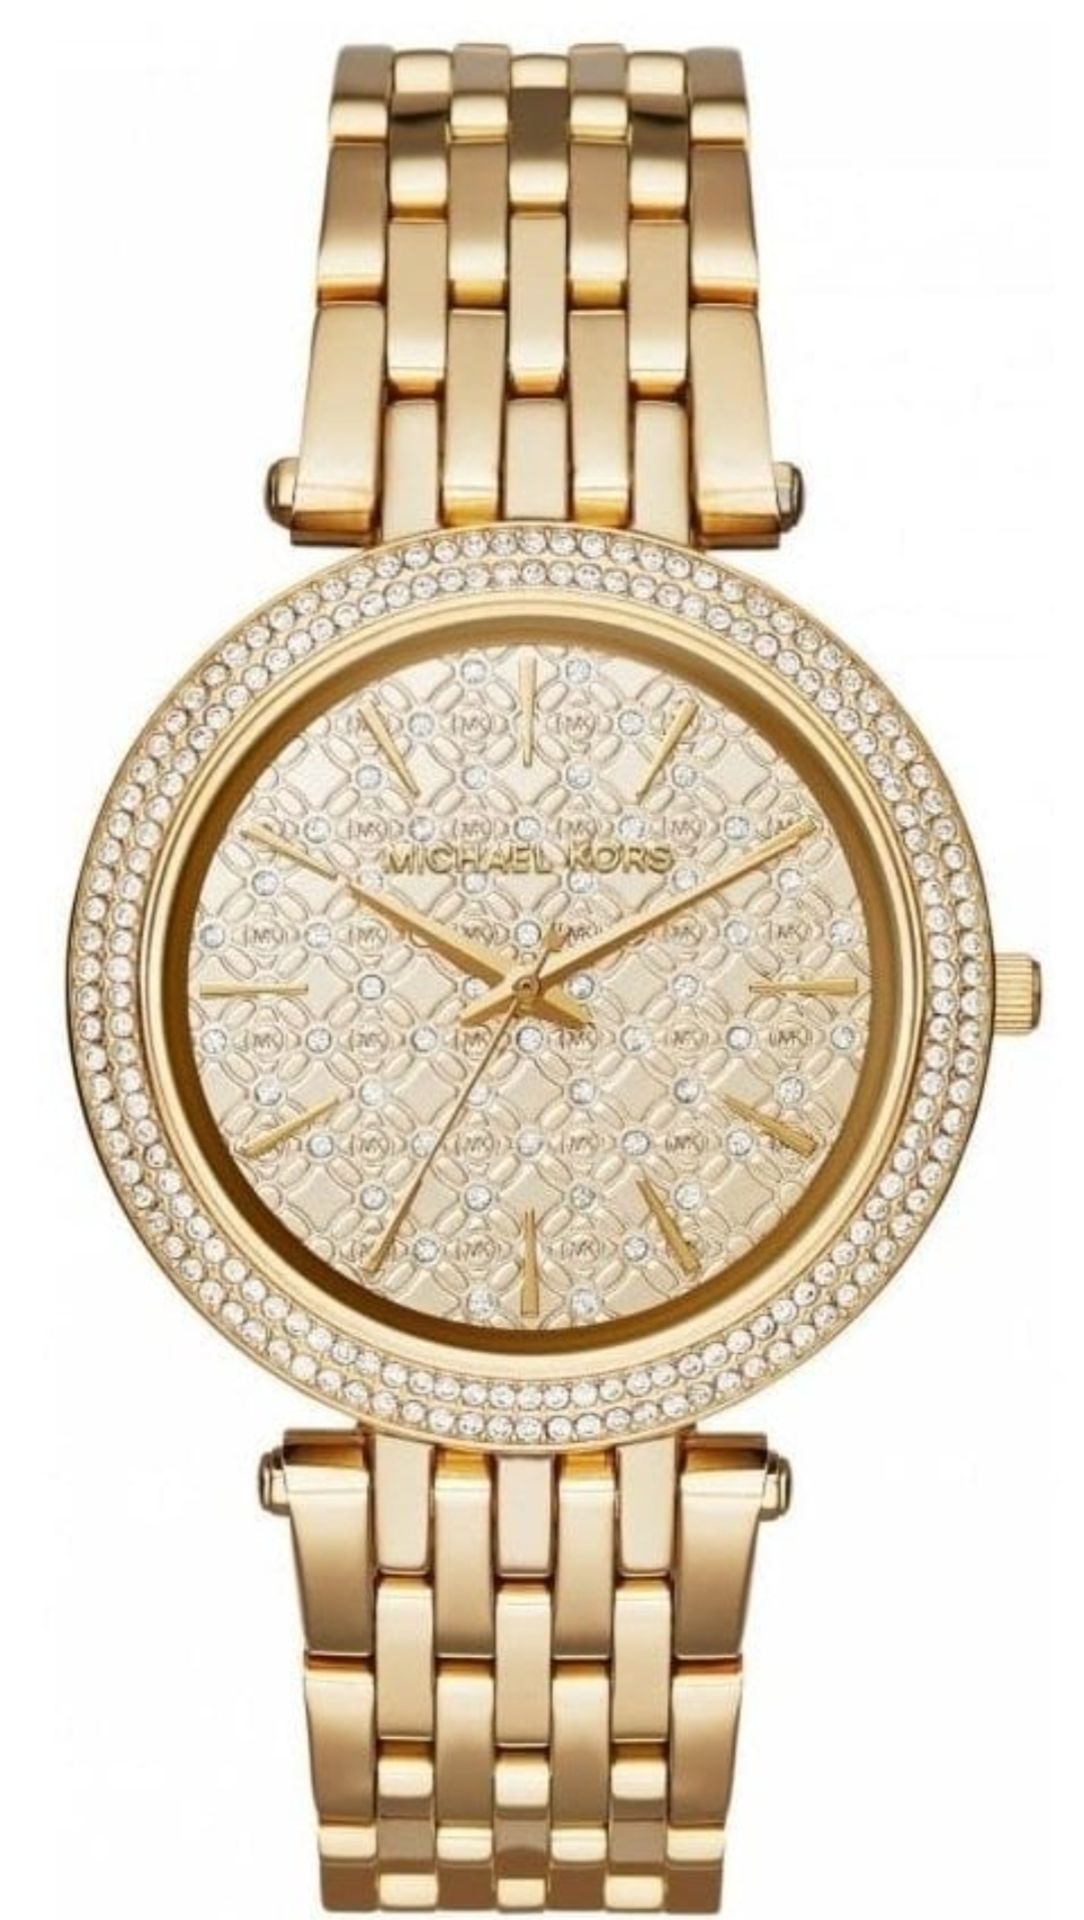 Michael Kors MK3398 Darci Gold-Tone Stainless Steel Ladies Watch